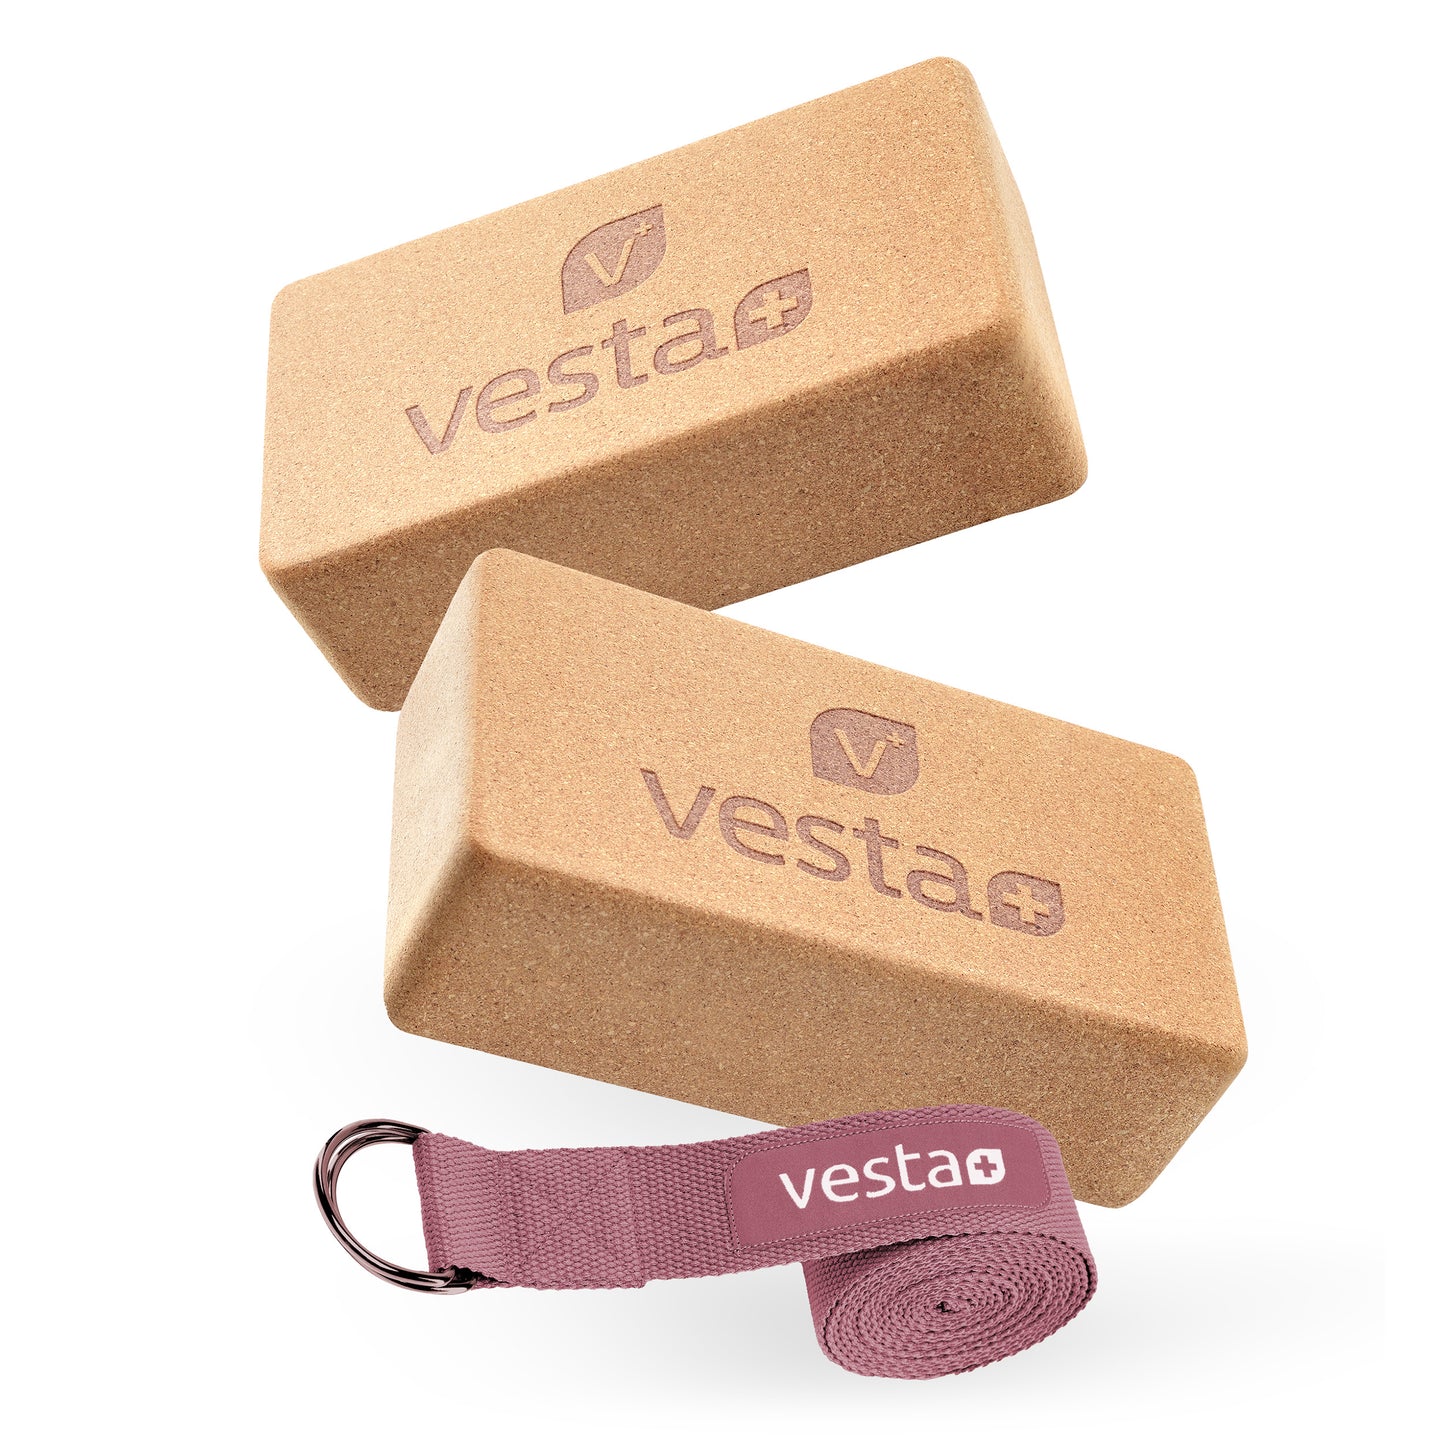 Yoga block set with strap